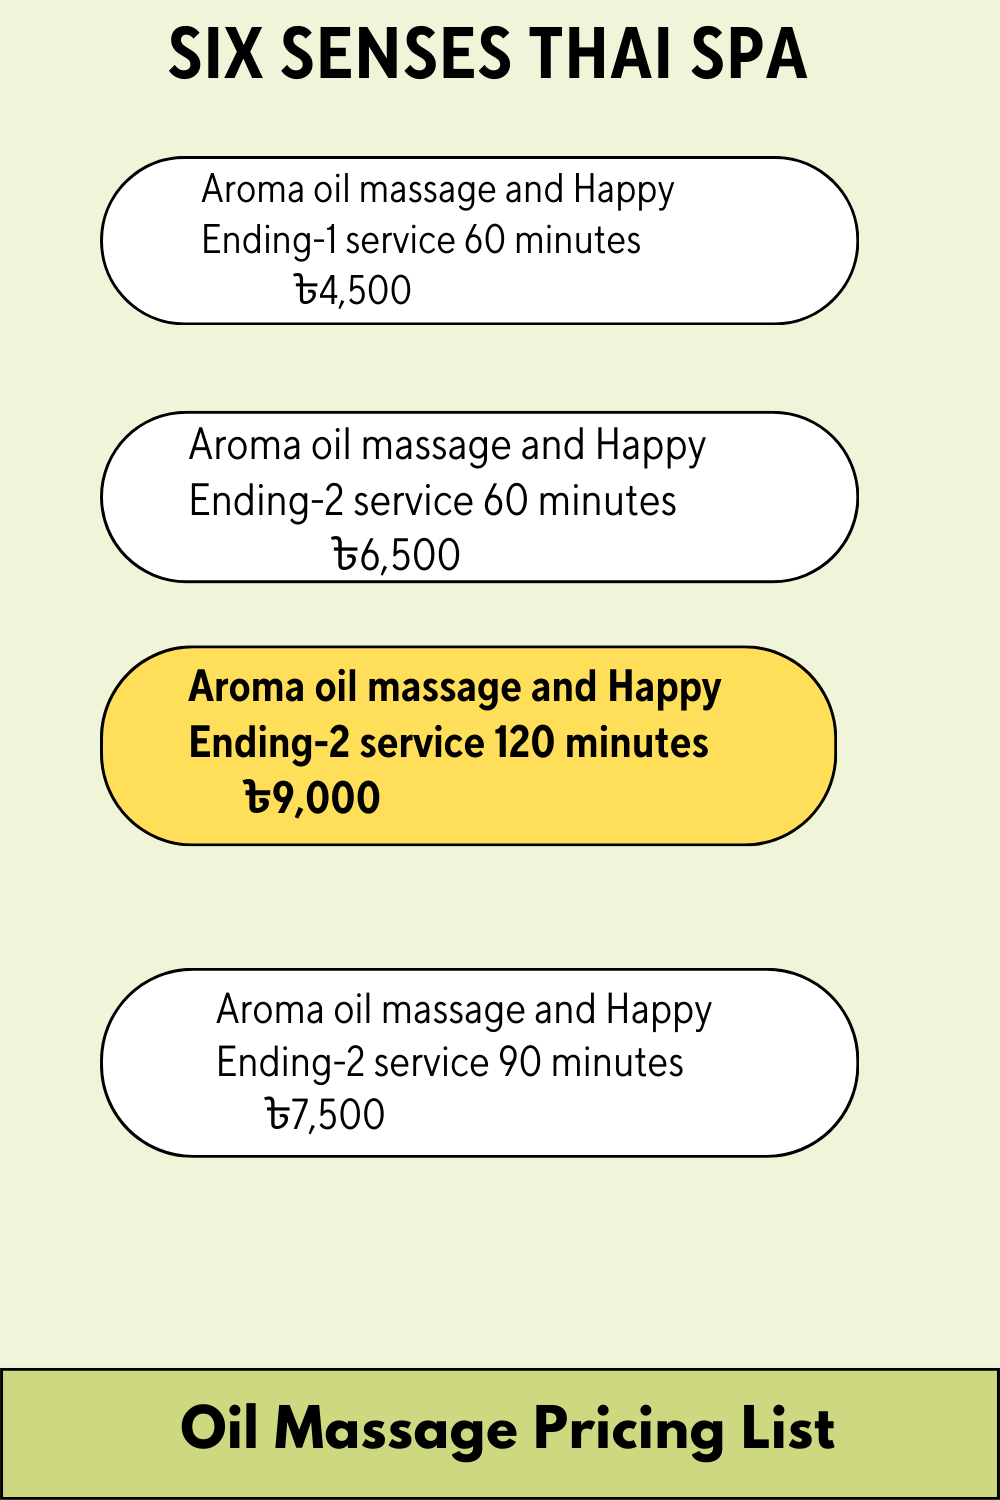 candice dunston recommends oil massage happy ending pic